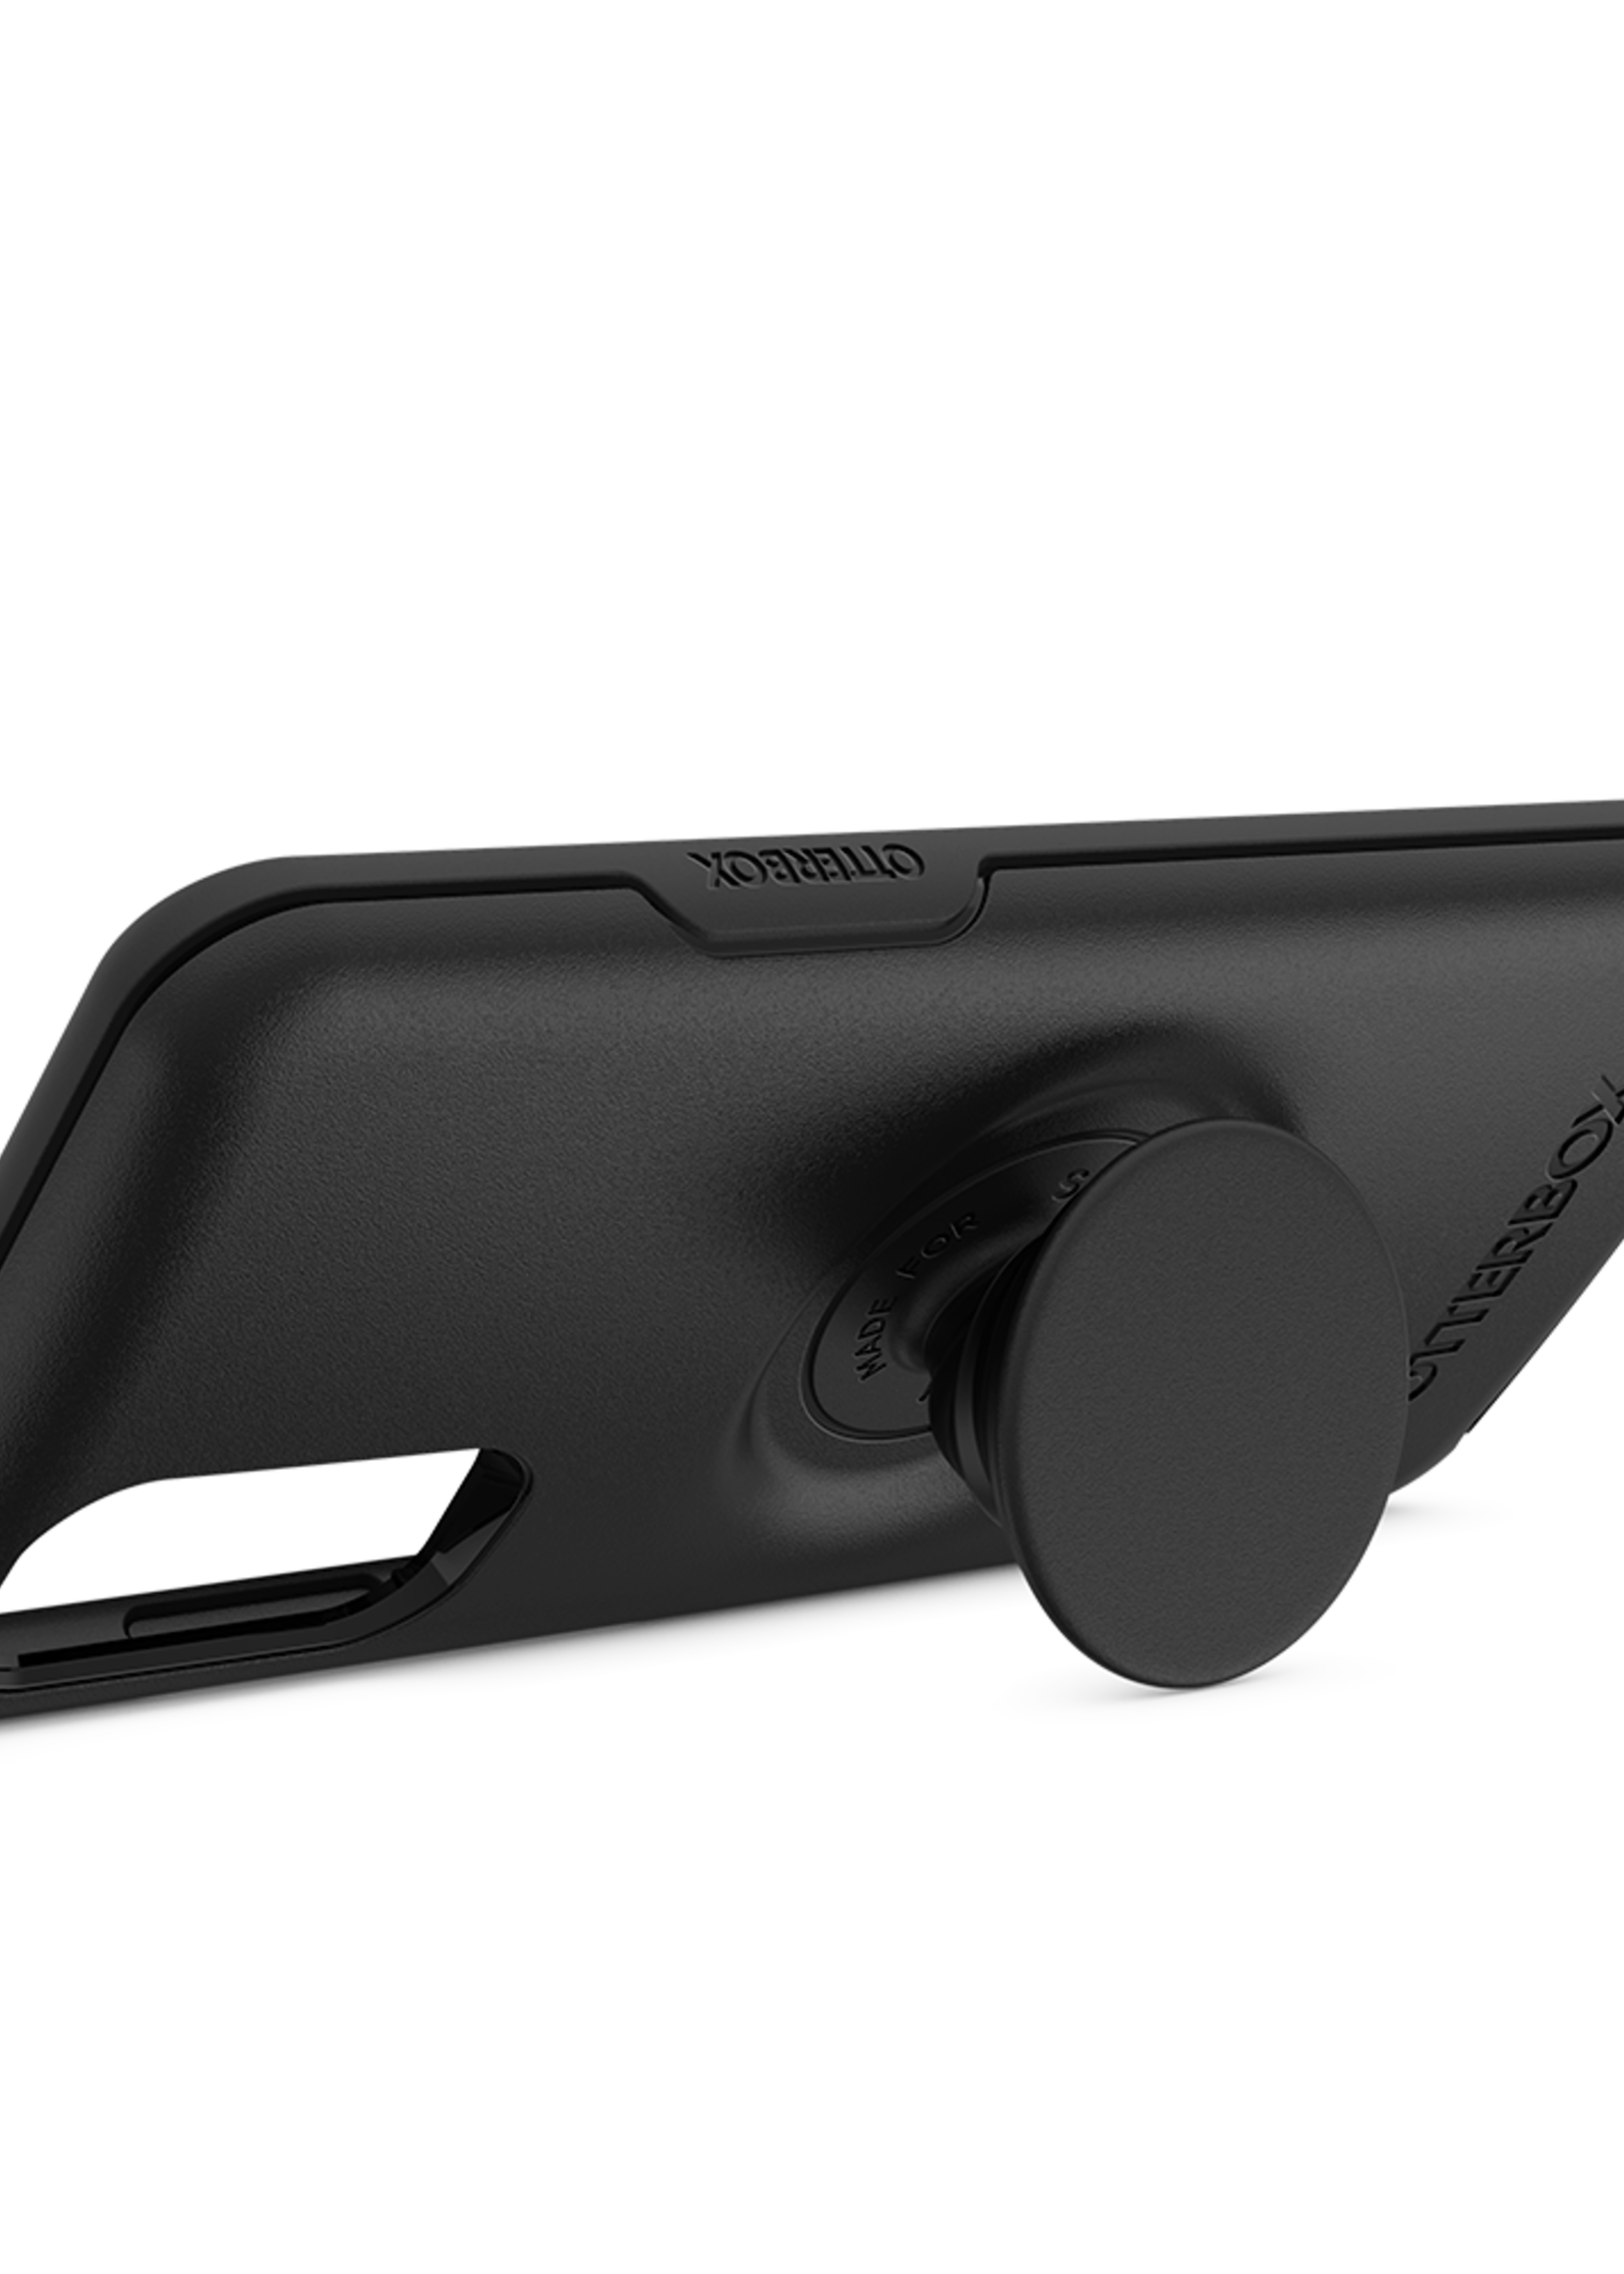 Samsung OtterBox - Otter + Pop Symmetry Case with PopGrip for Samsung Galaxy S20 / S20 5G UW - Black